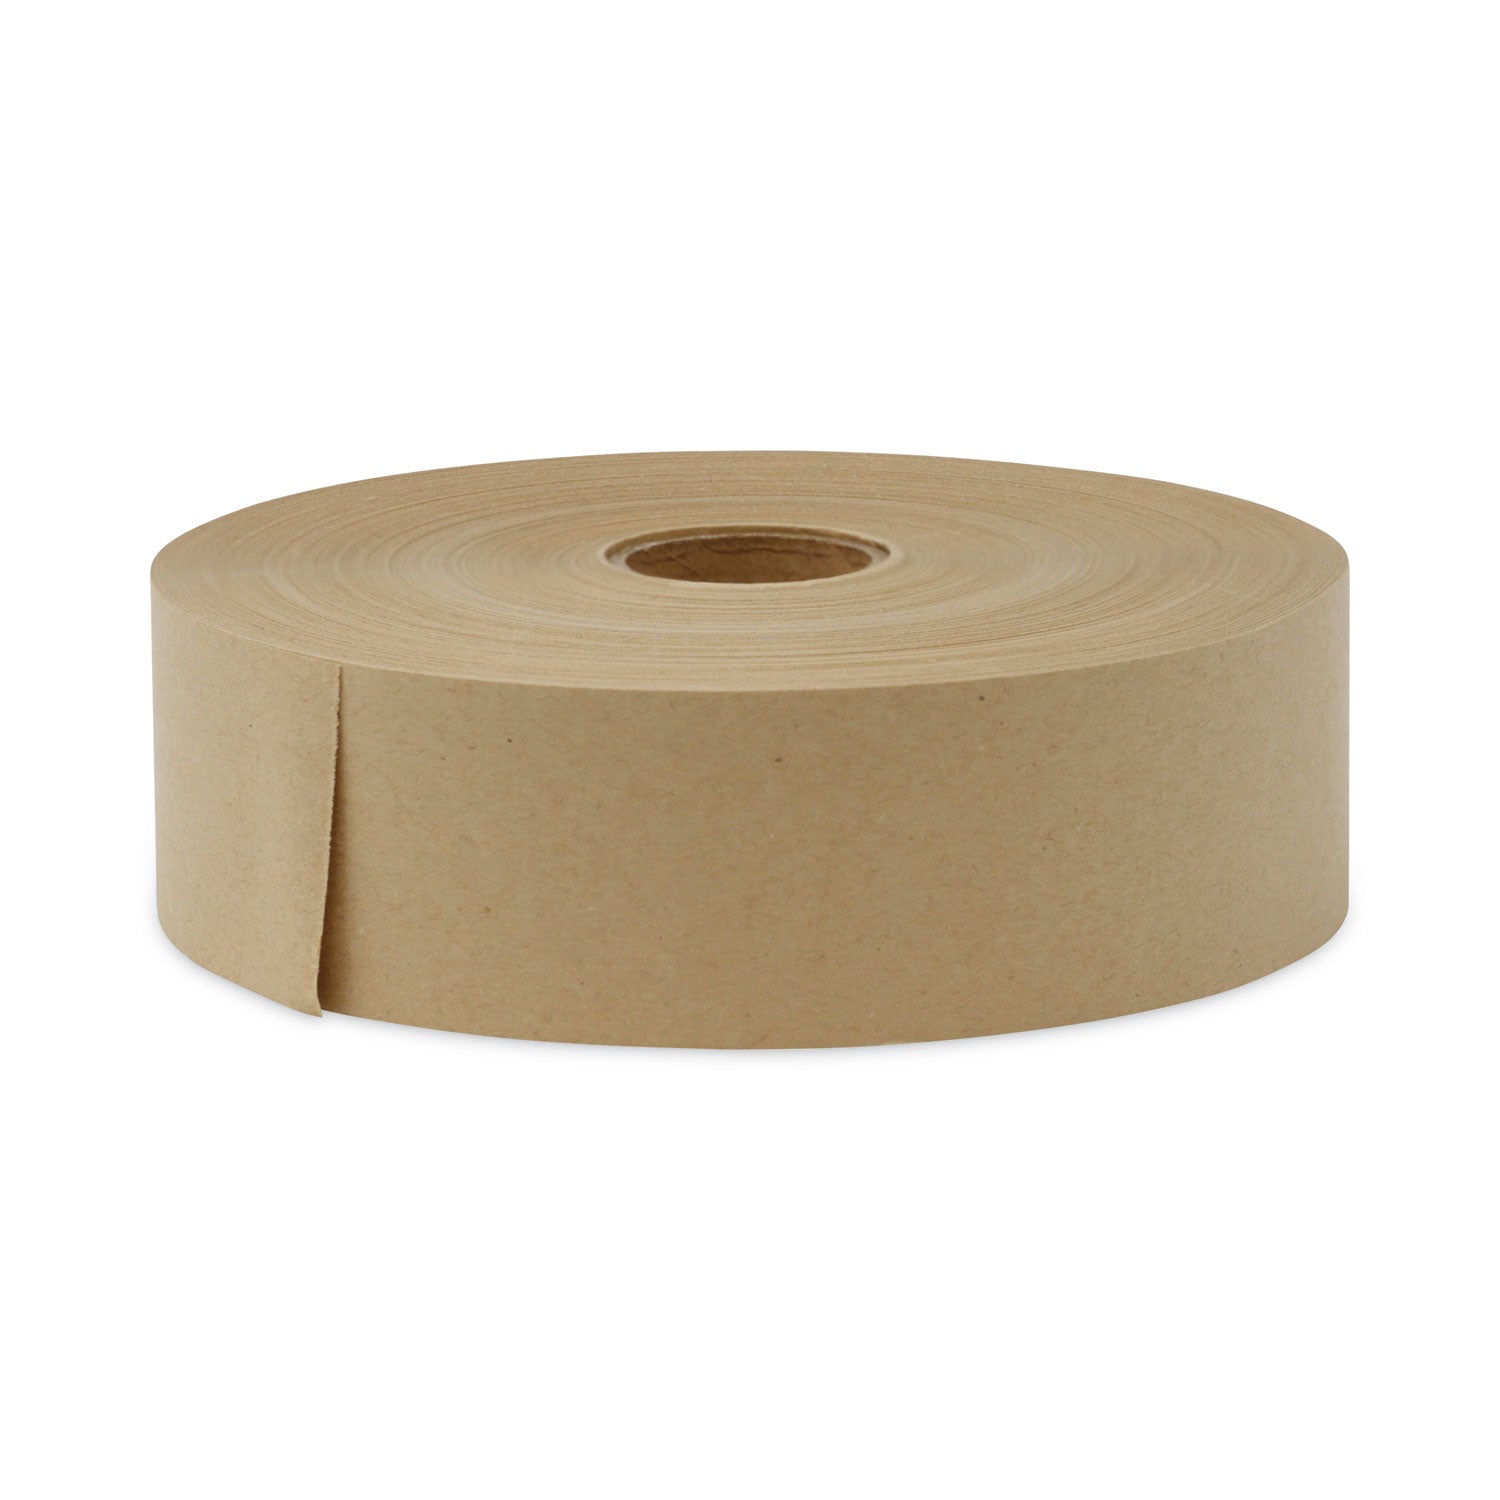 gummed-kraft-sealing-tape-3-core-2-x-600-ft-brown-12-carton_unv2163 - 5